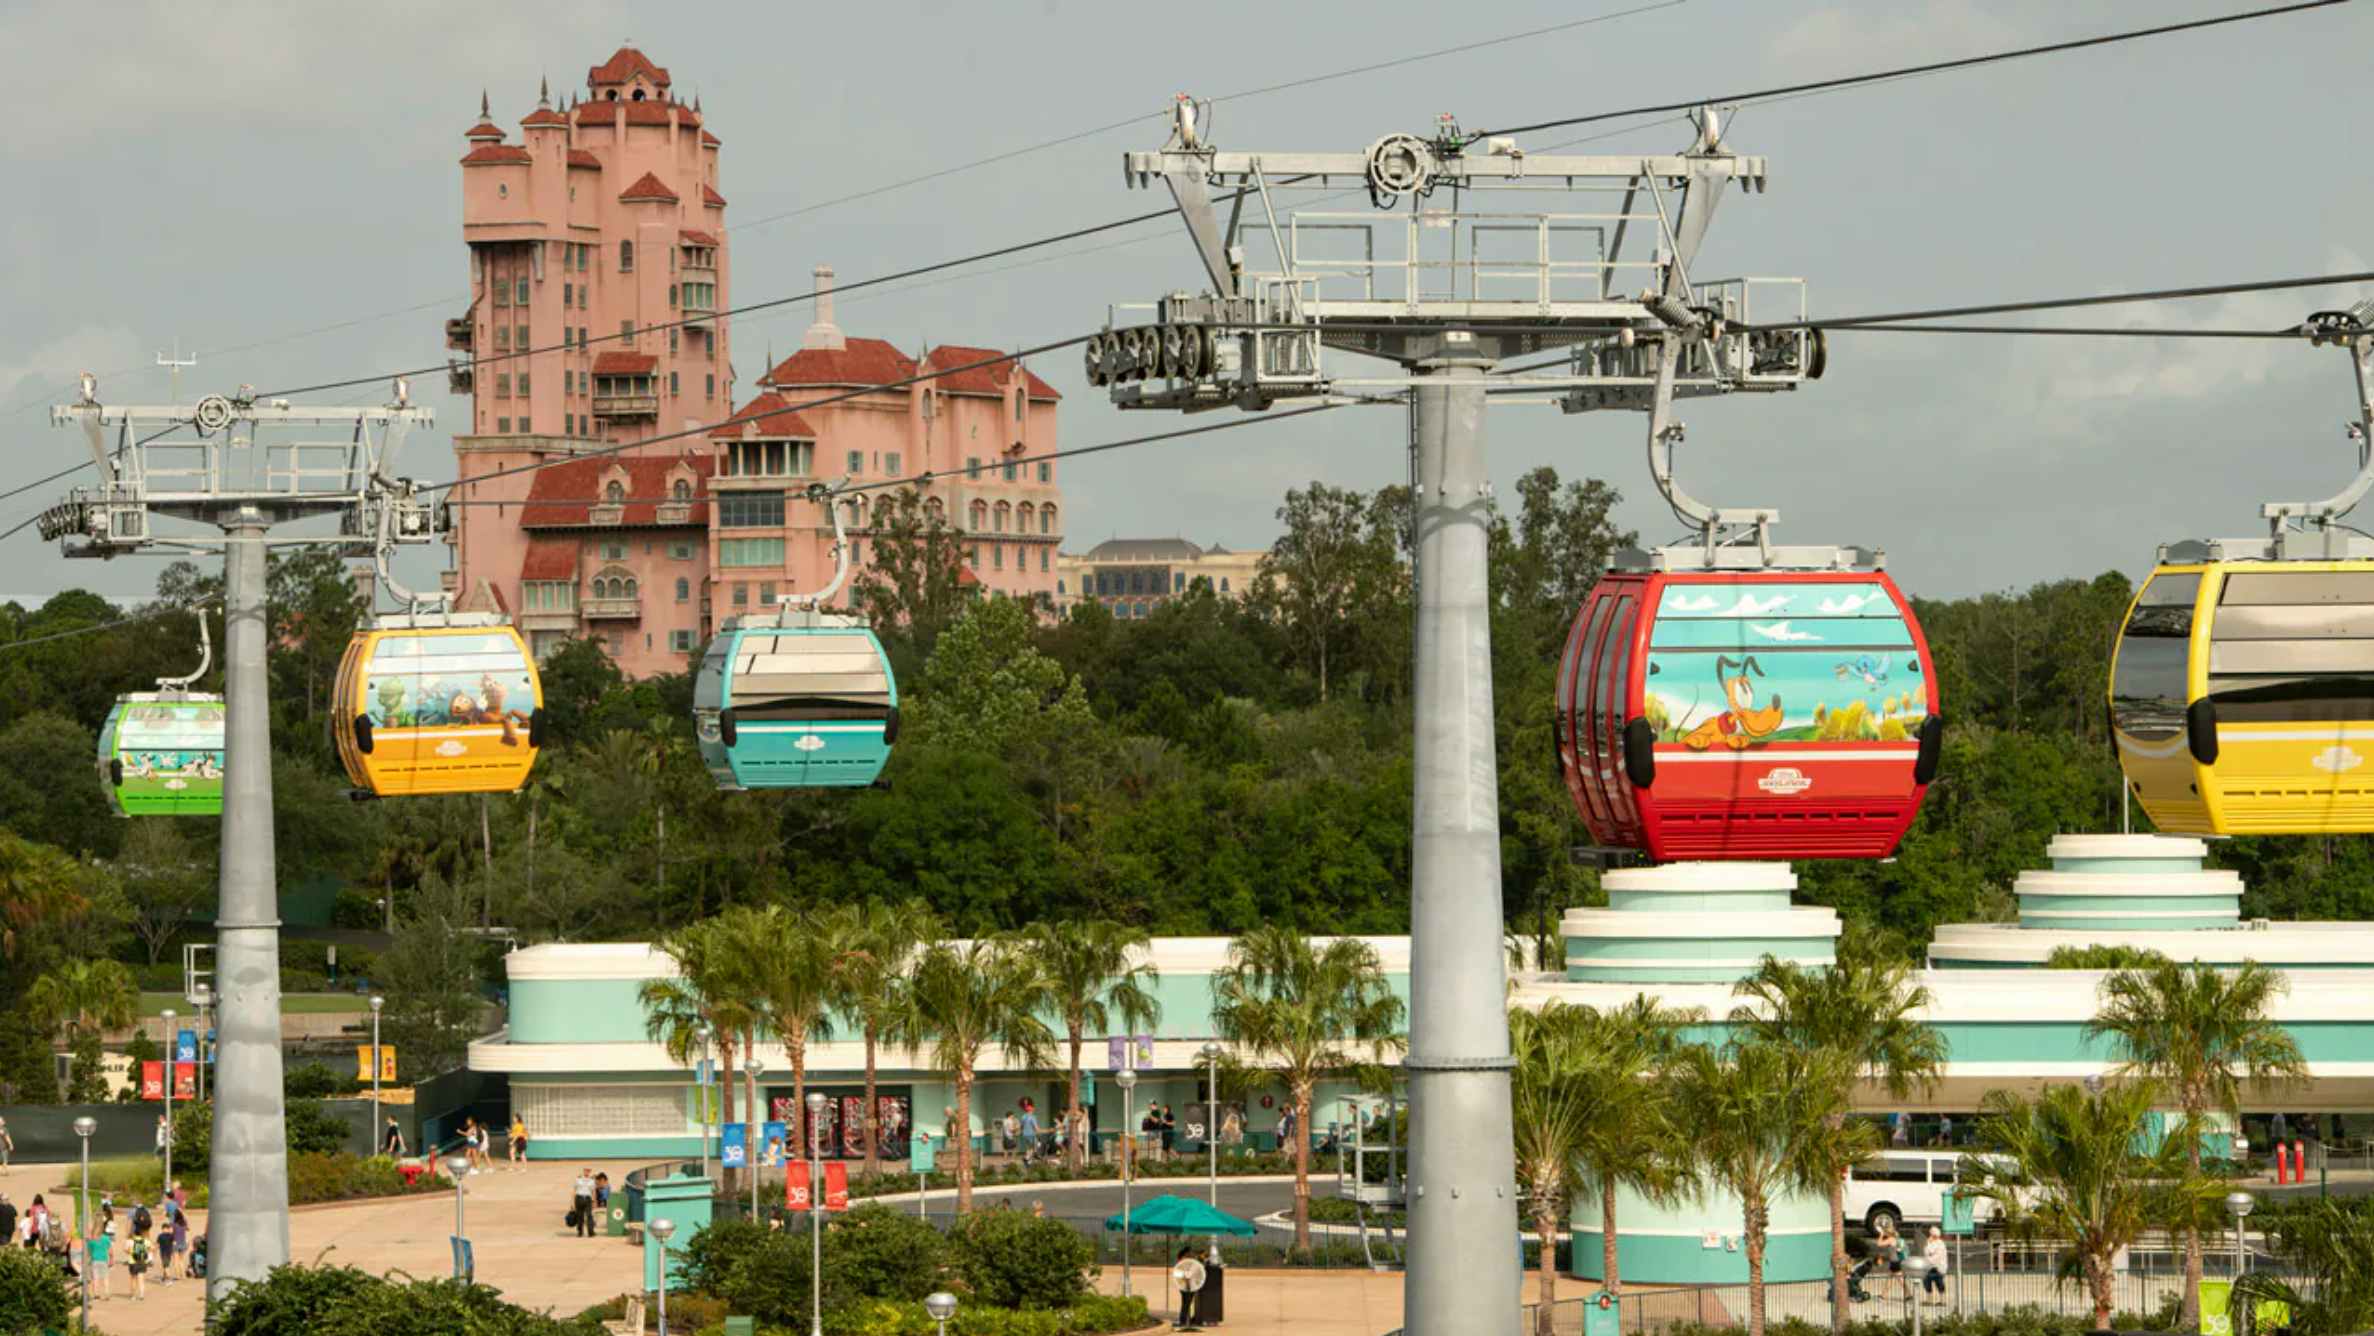 Walt Disney World Disney Skyliner gondola with Tower of Terror in the background